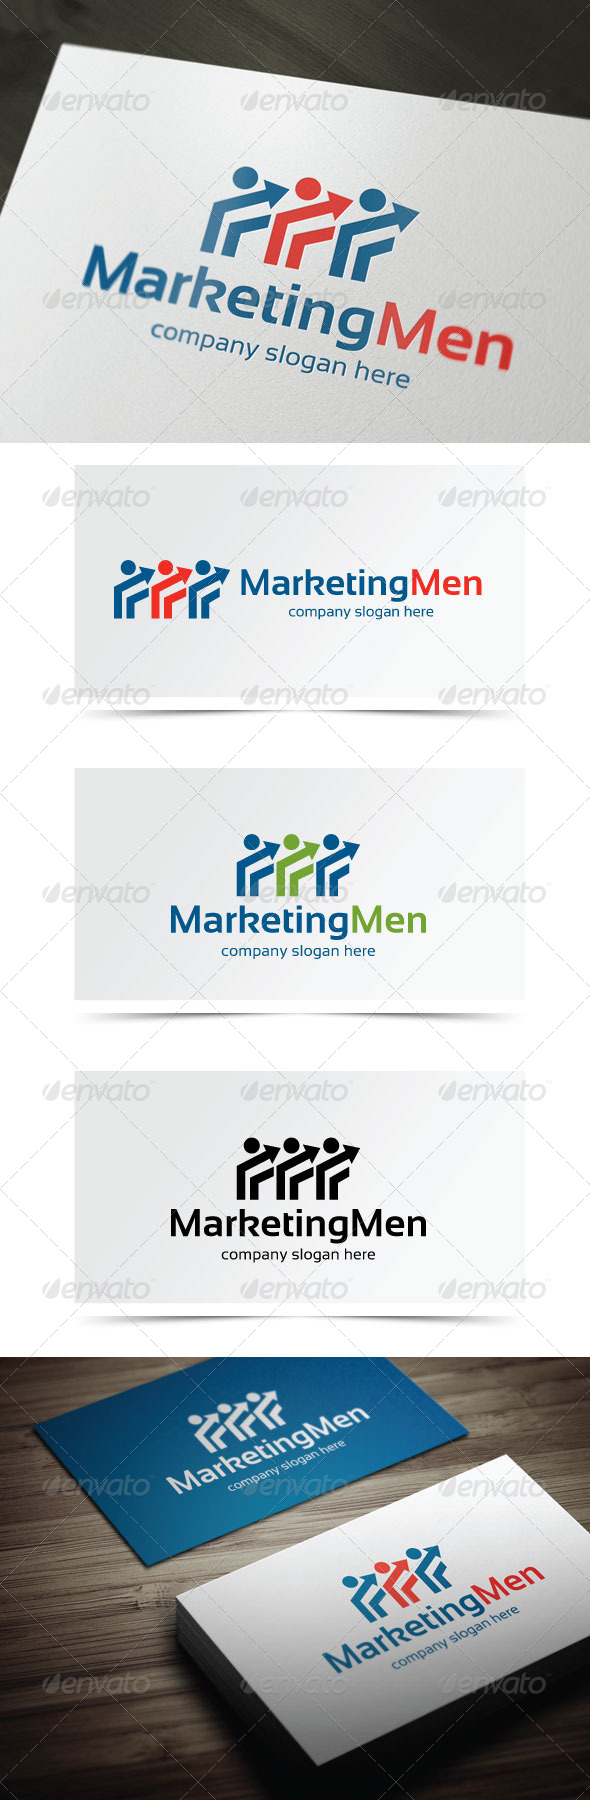 Marketing Men